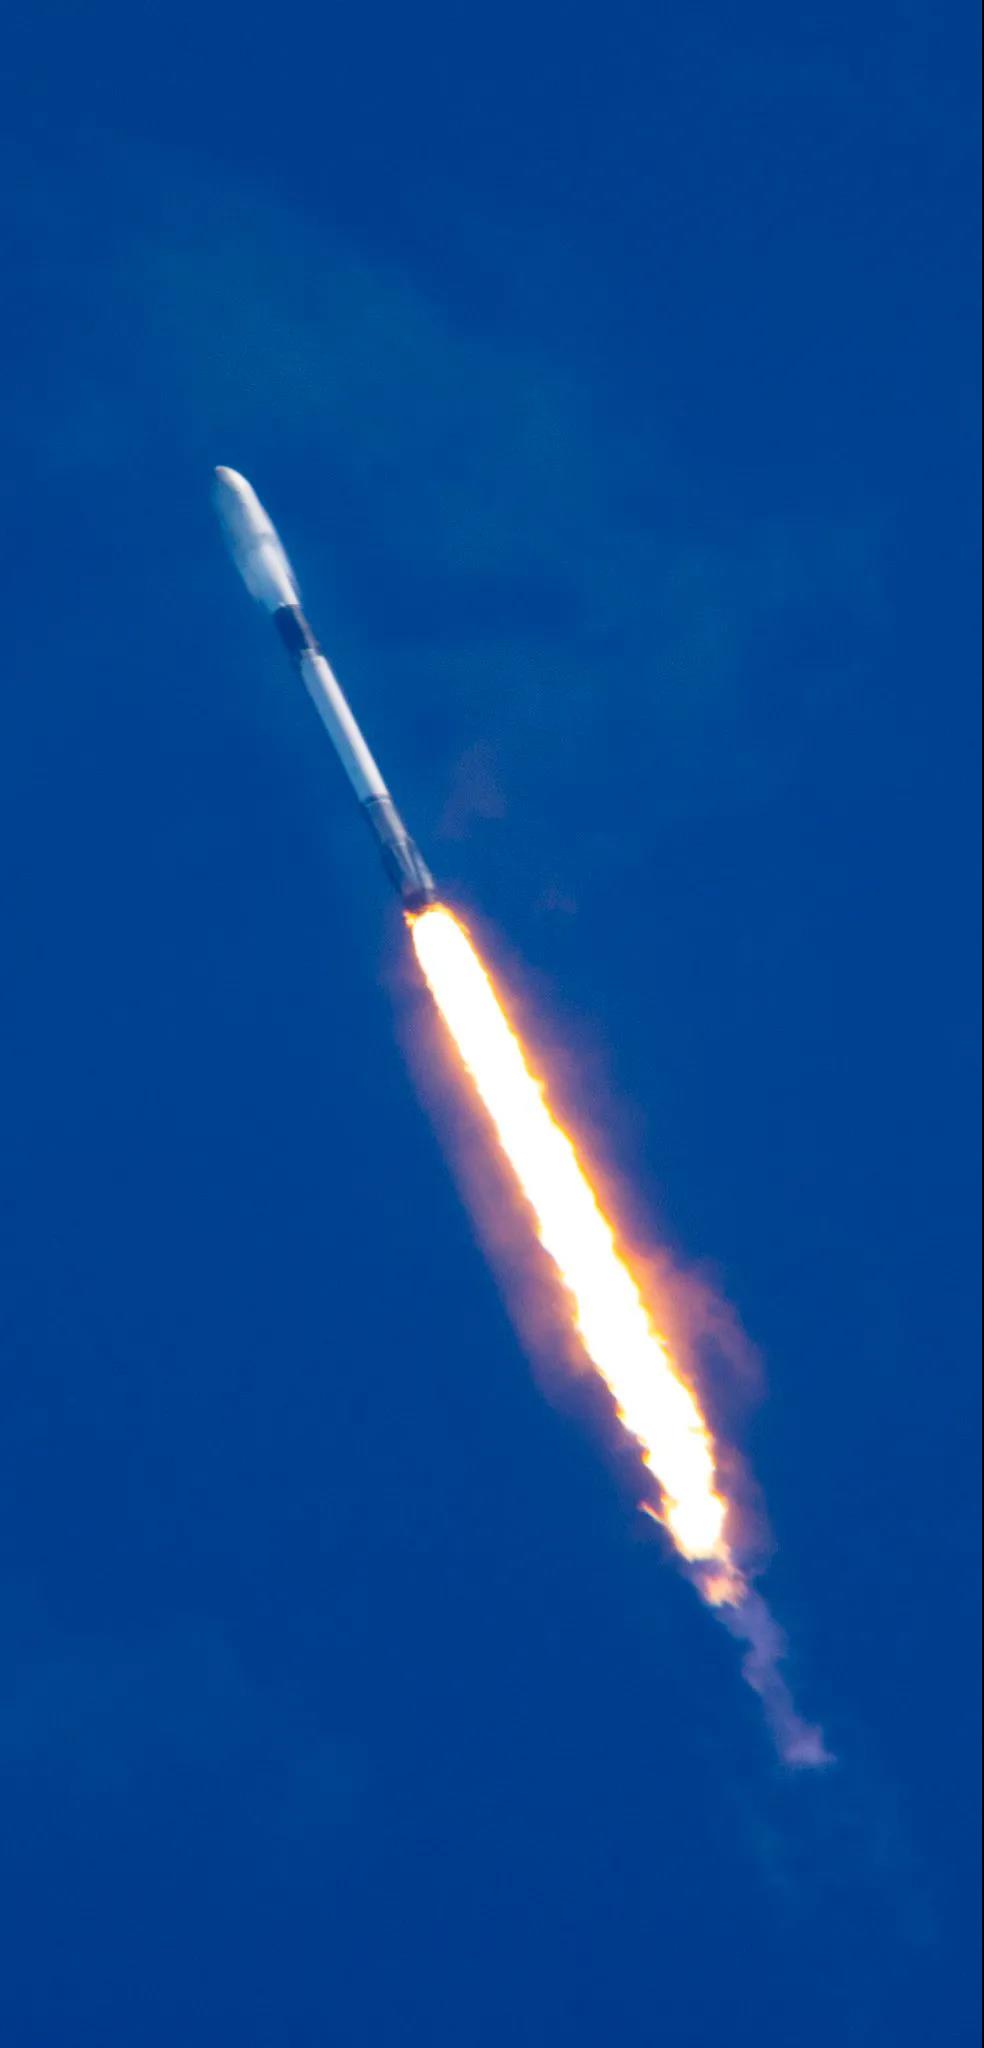 starlink28任务发射成功，完成星链星座第一个轨道层